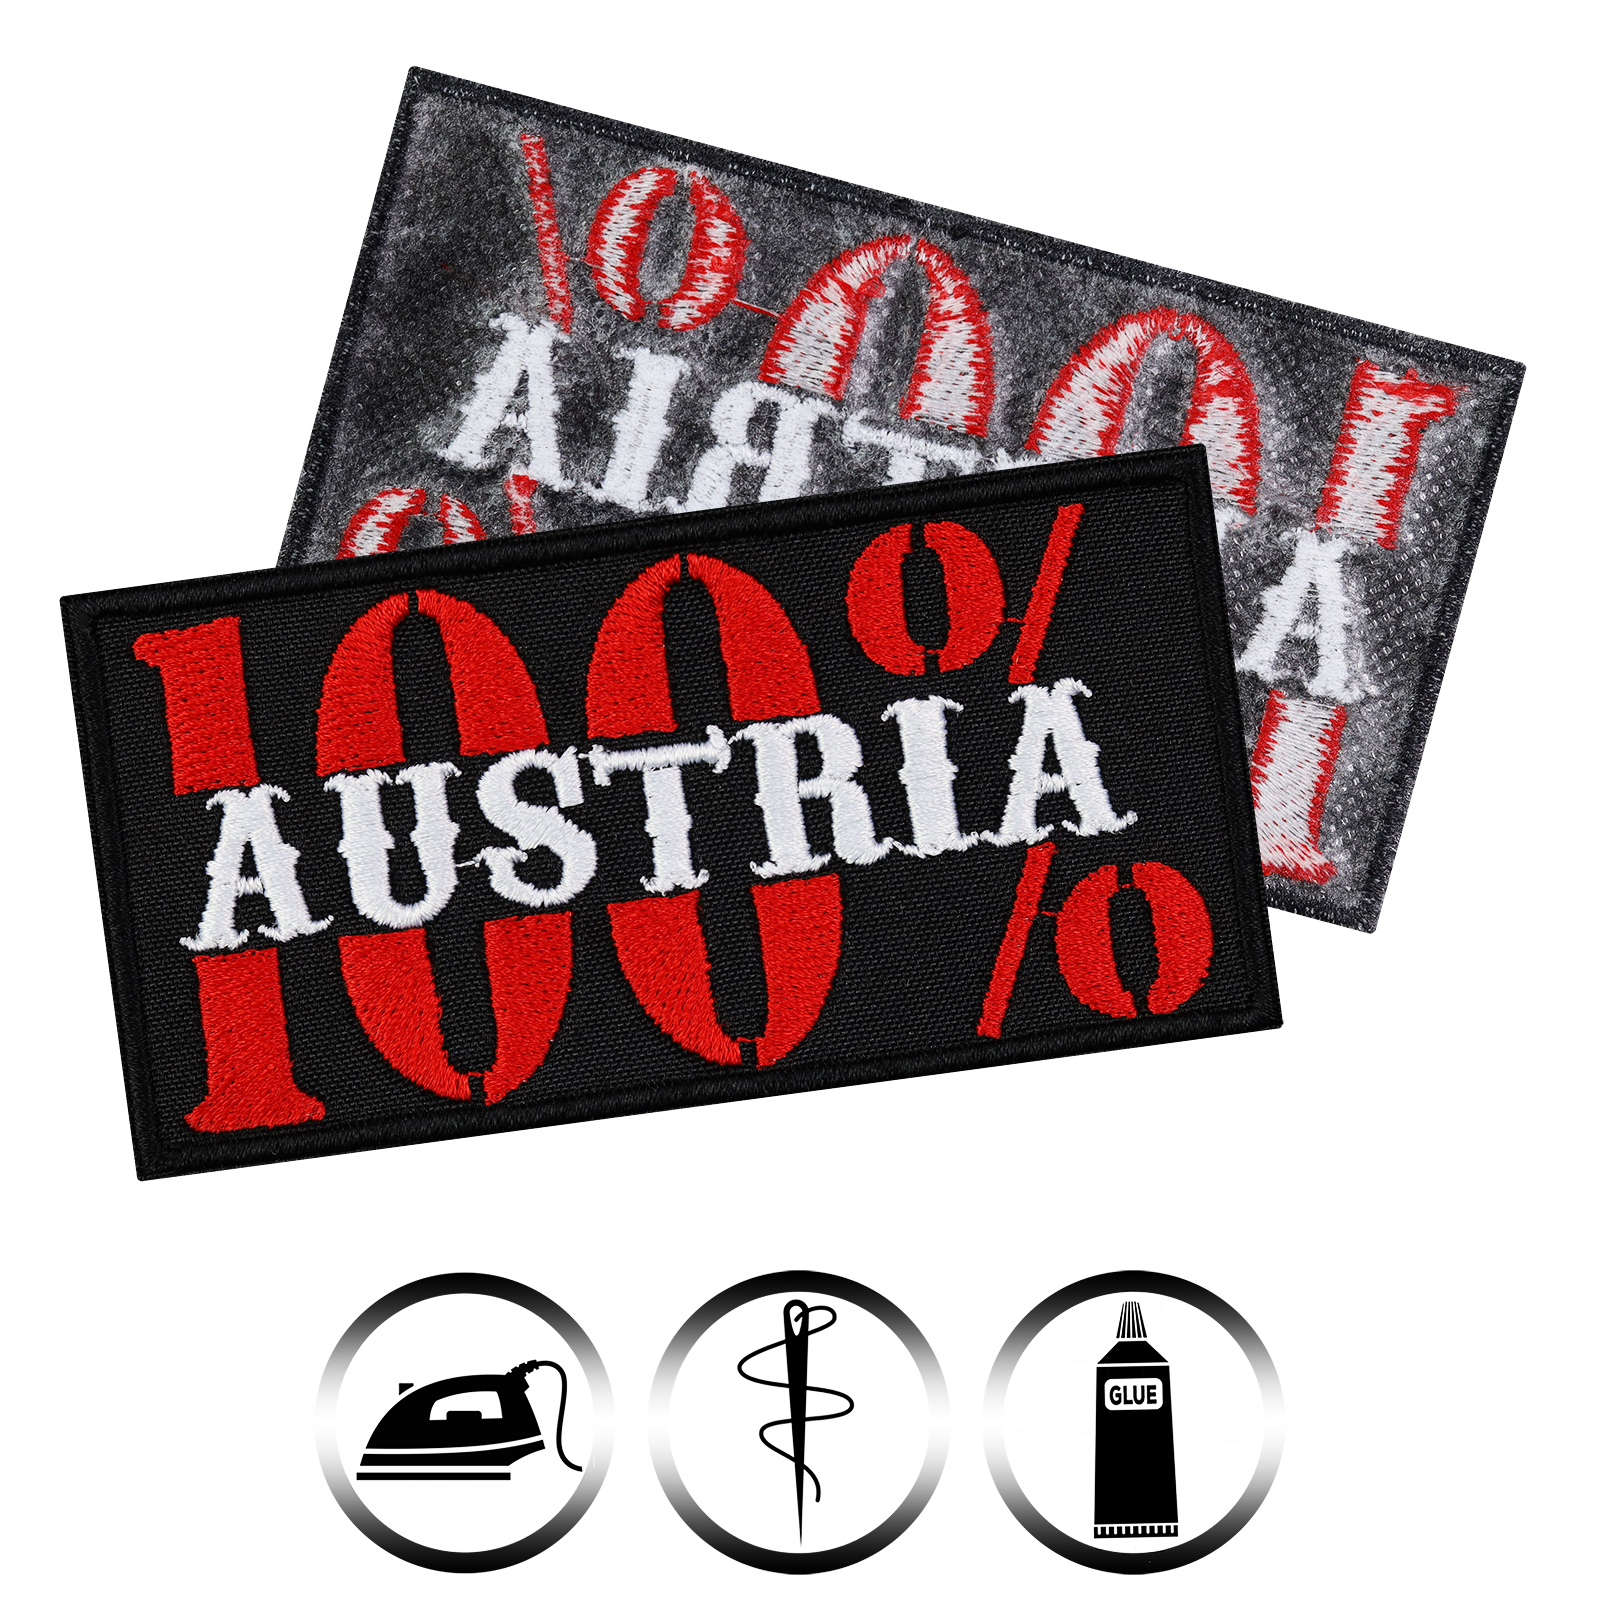 100% Austria - Patch